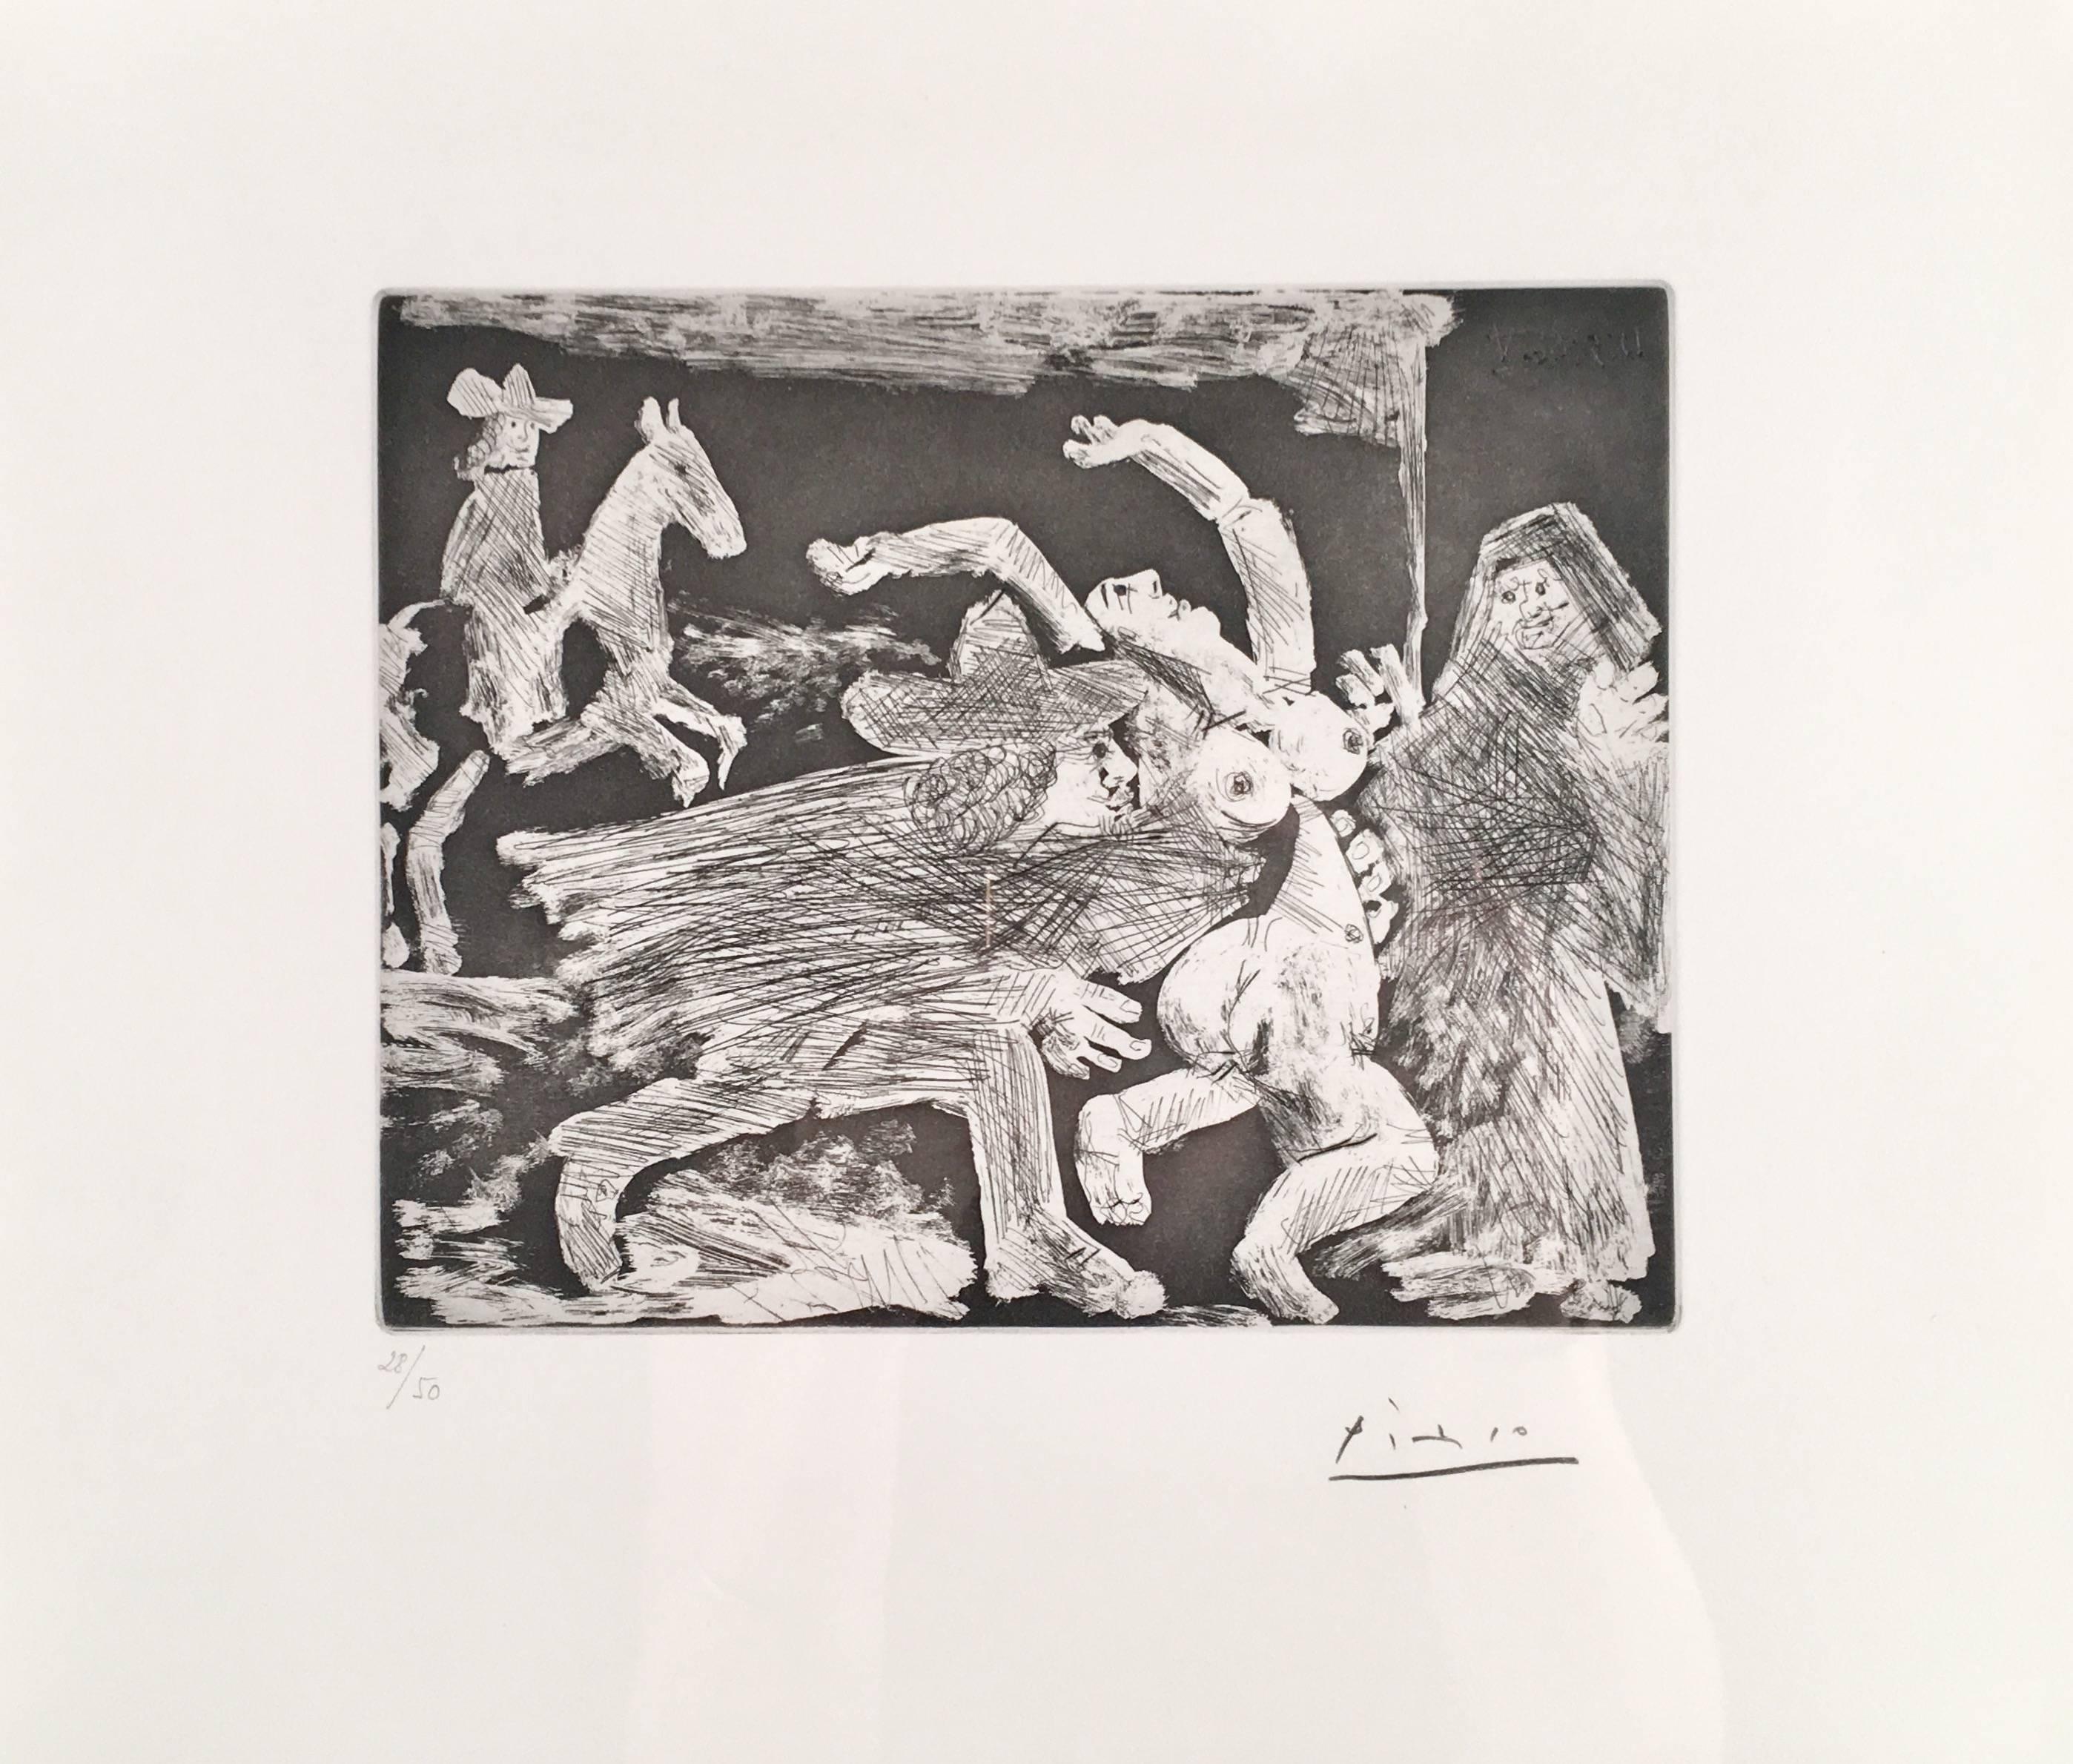 Pablo Picasso, La célestine from 347 Series, etching